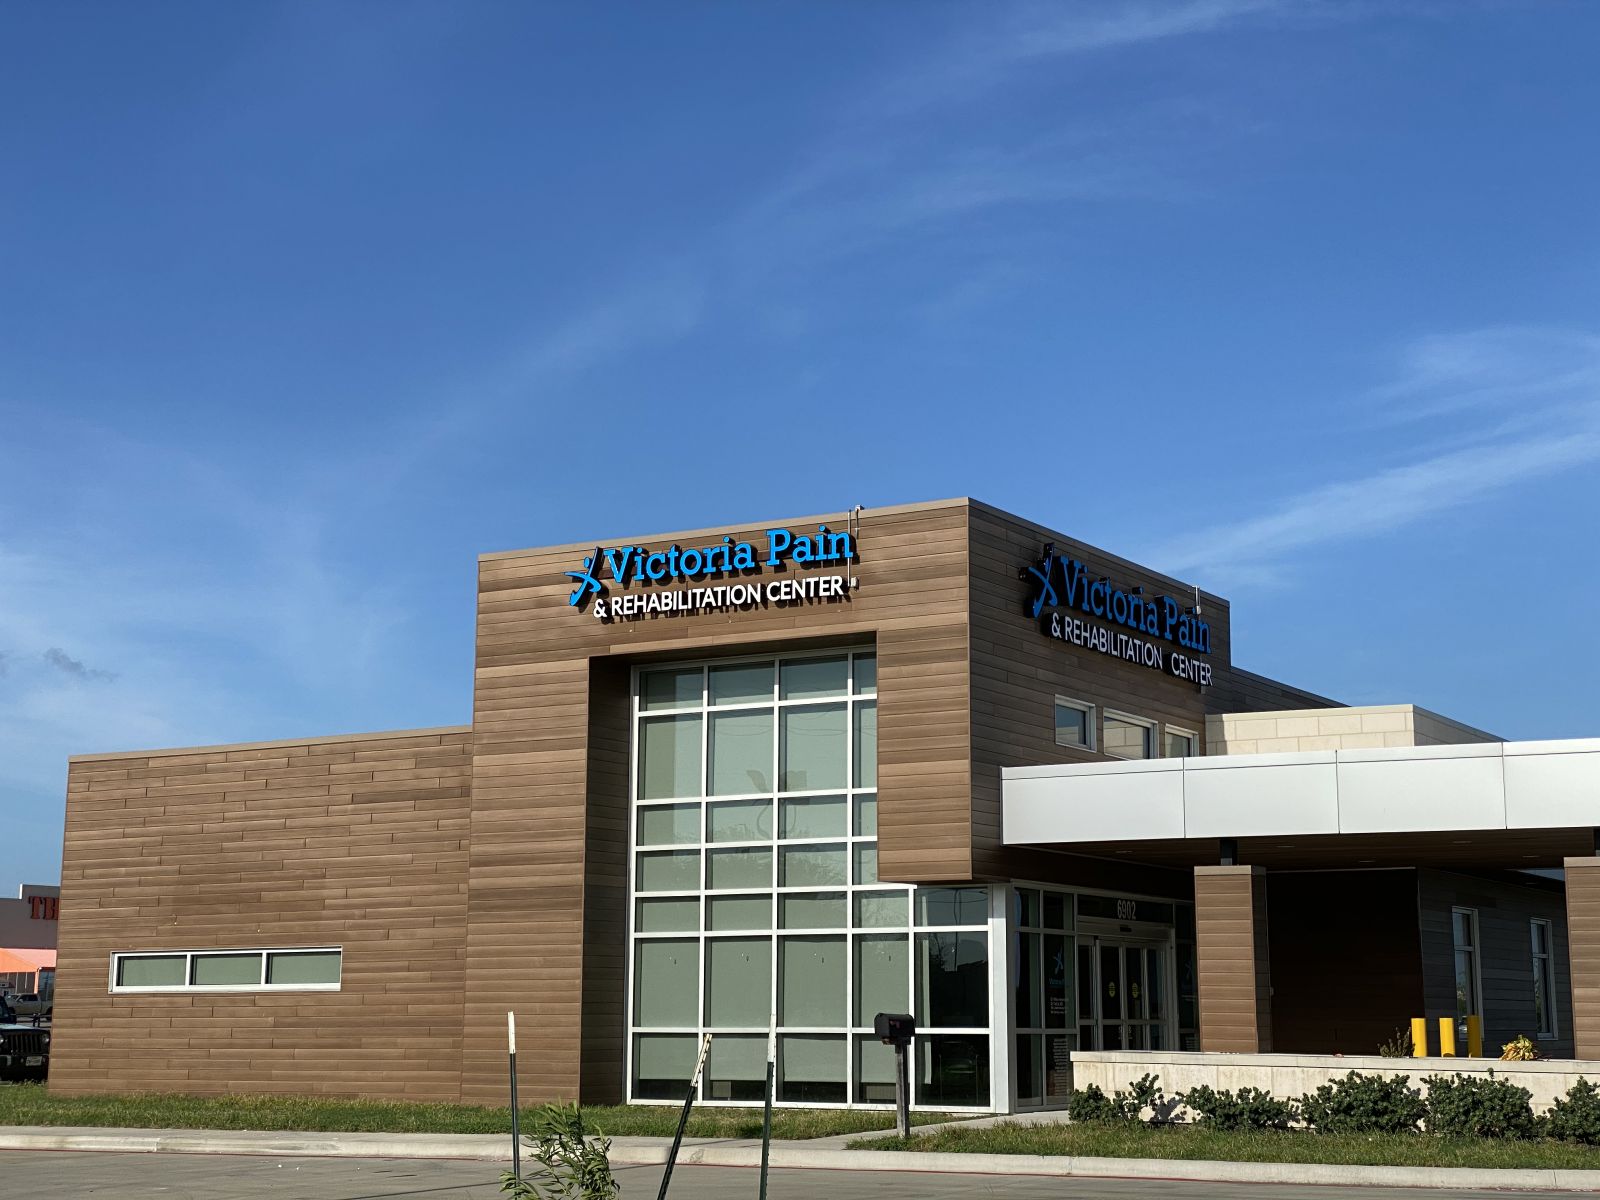 Victoria Pain & Rehabilitation Center